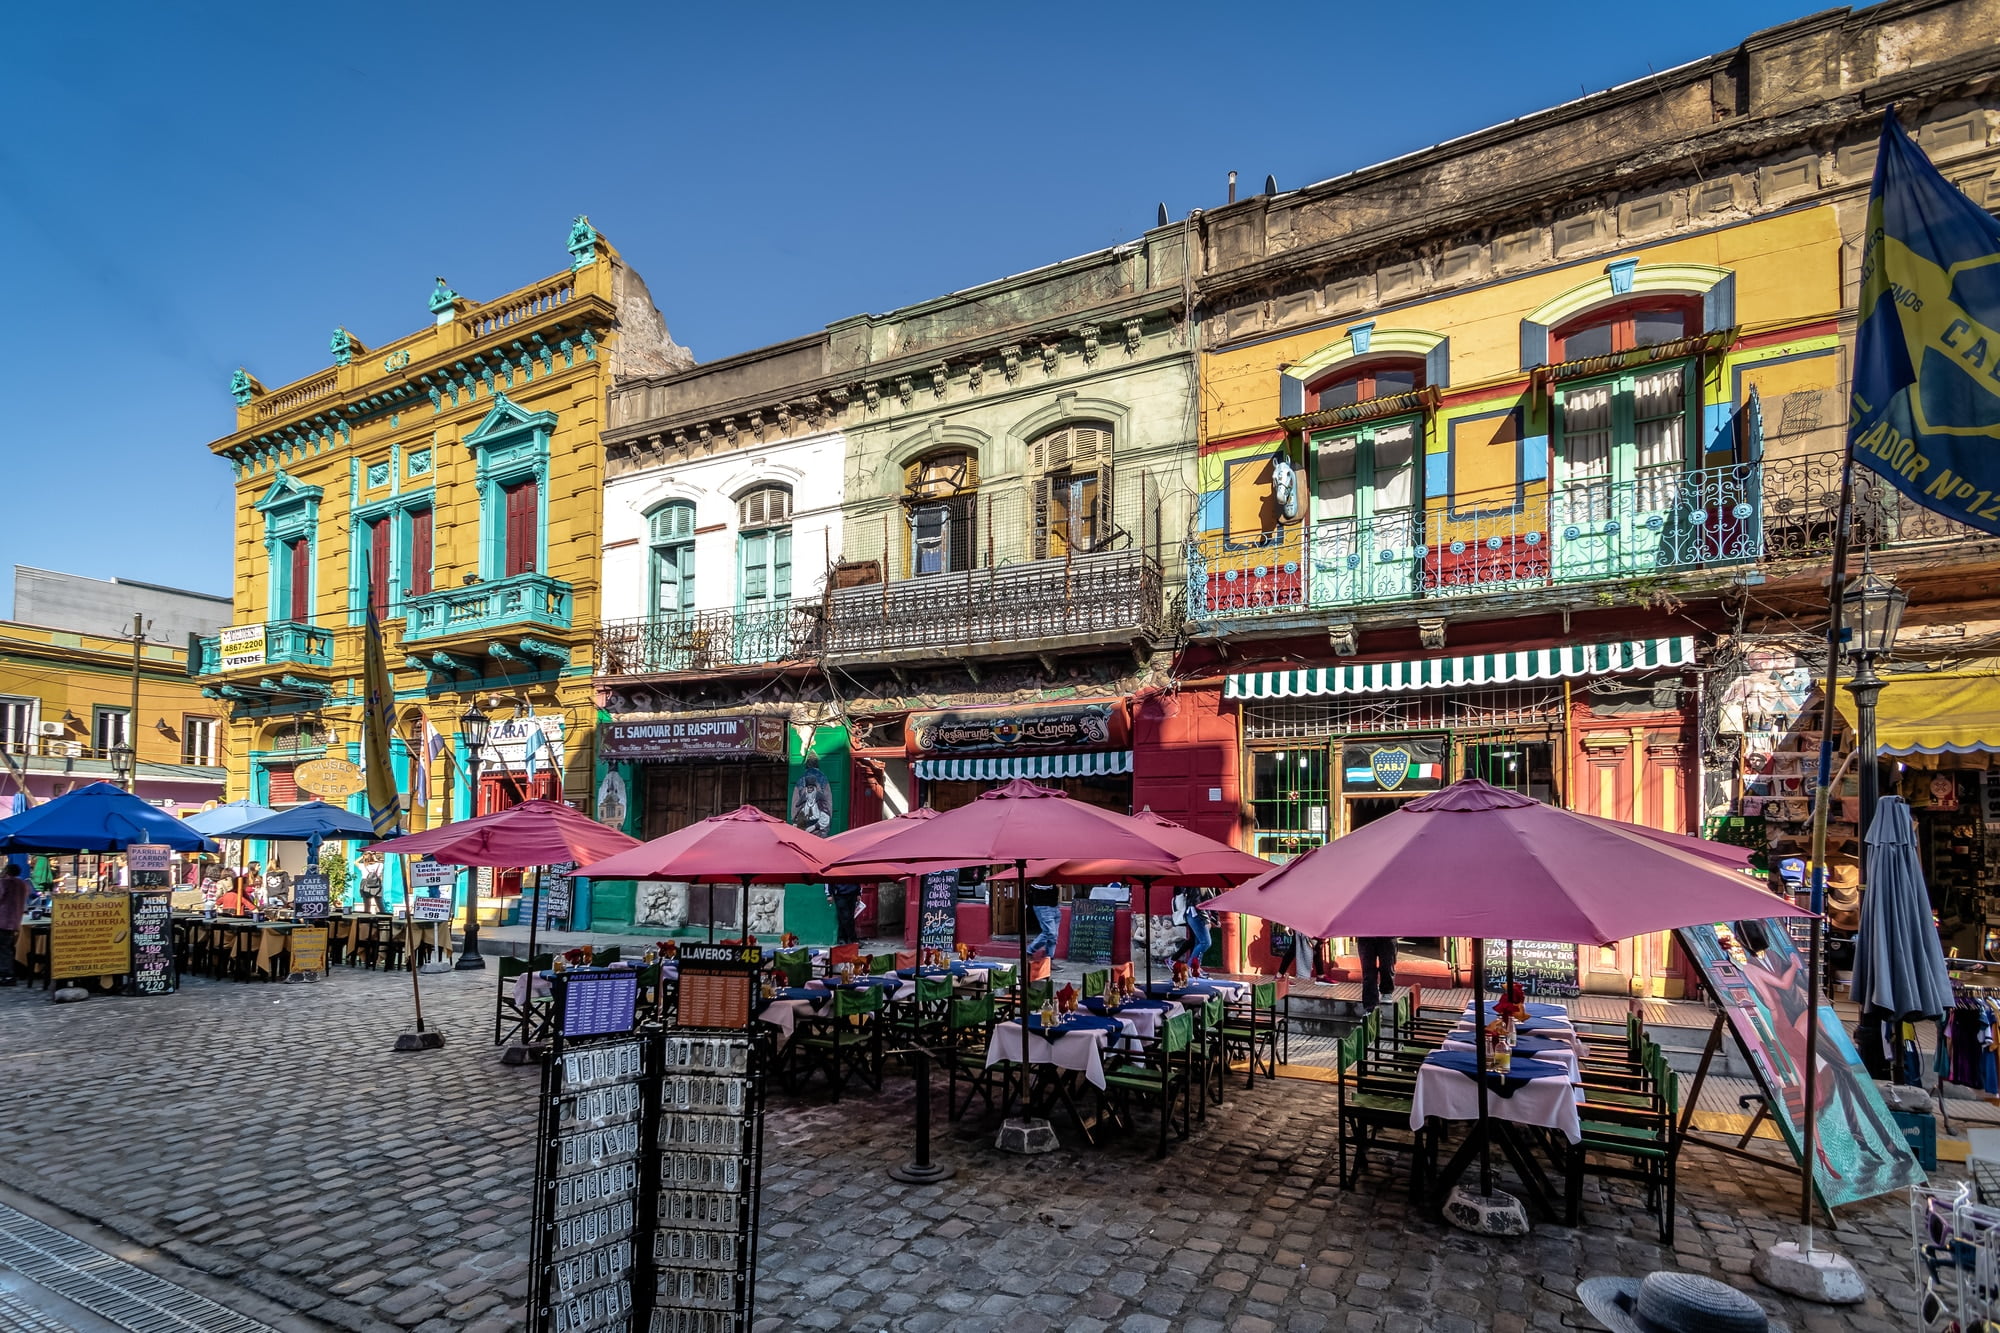 Restaurants in colorful neighborhood La Boca - Buenos Aires, Argentina